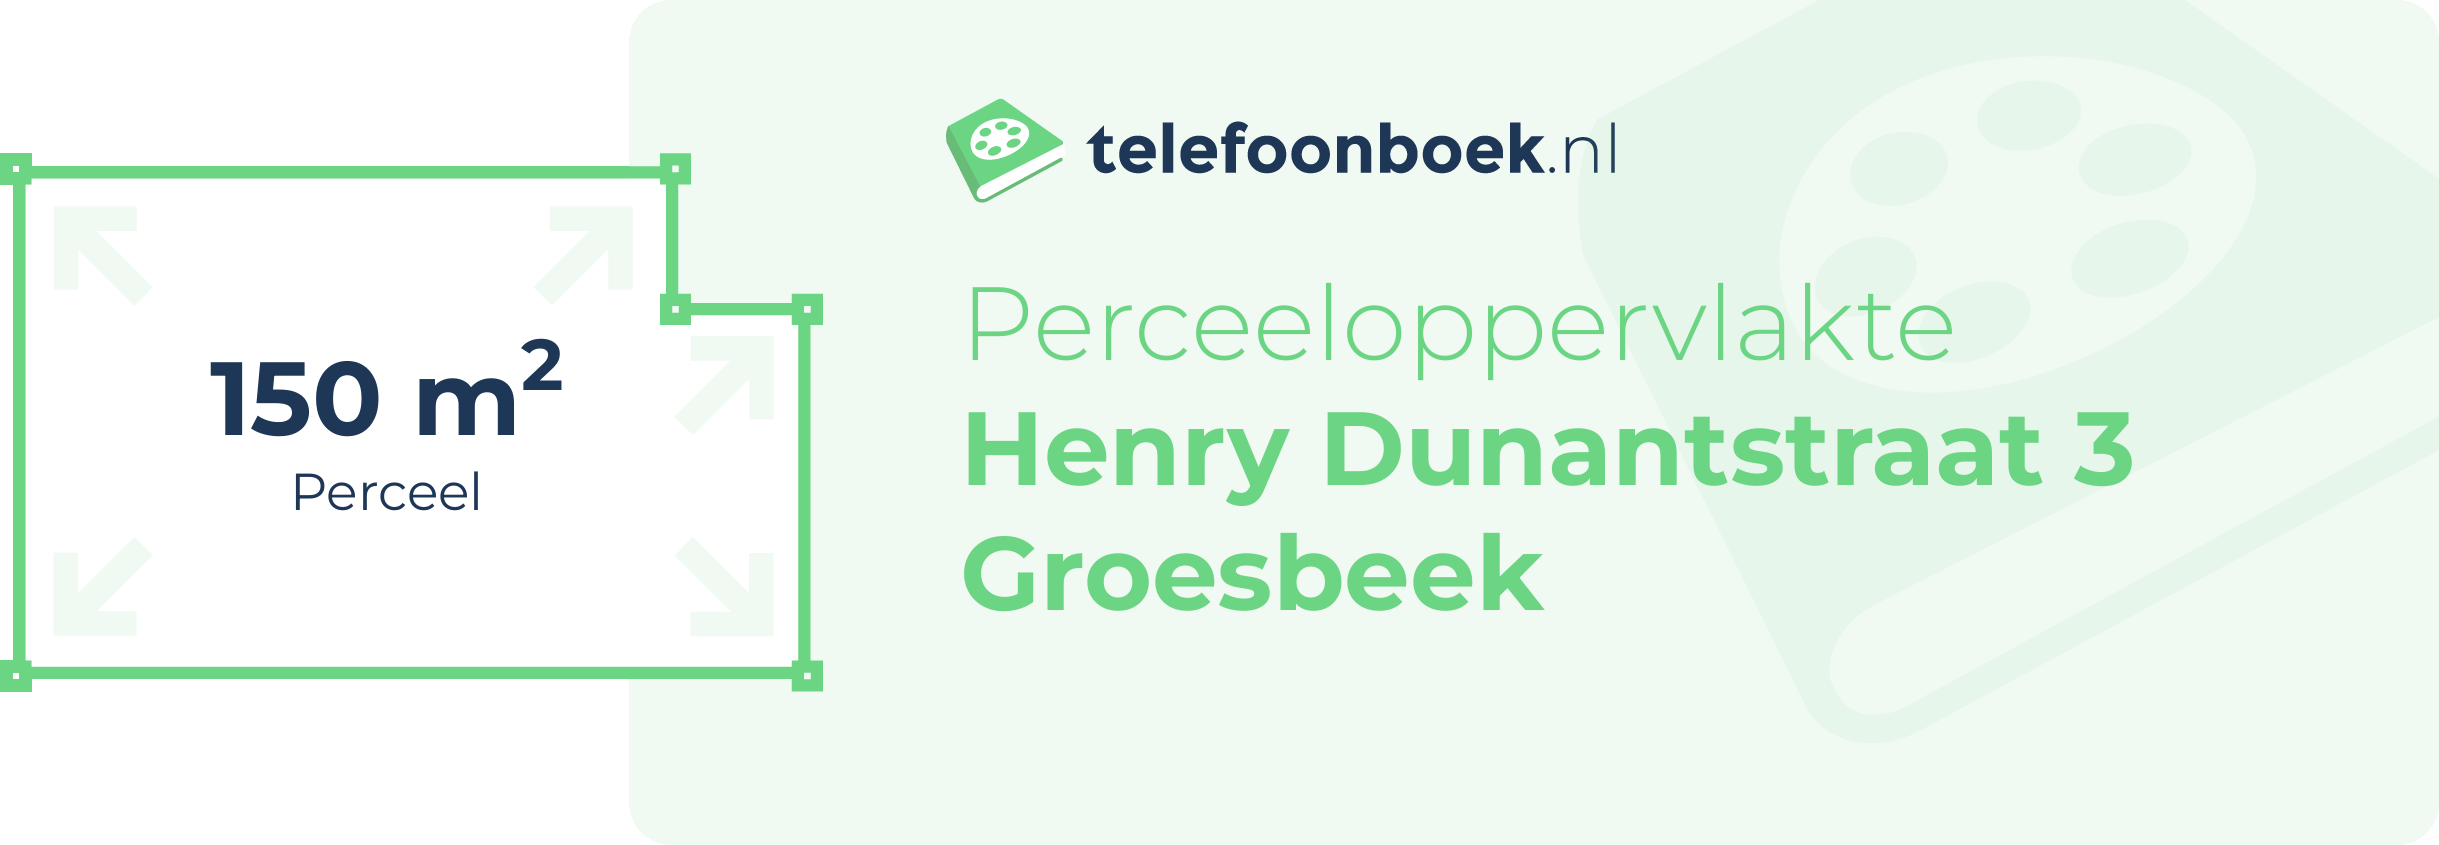 Perceeloppervlakte Henry Dunantstraat 3 Groesbeek